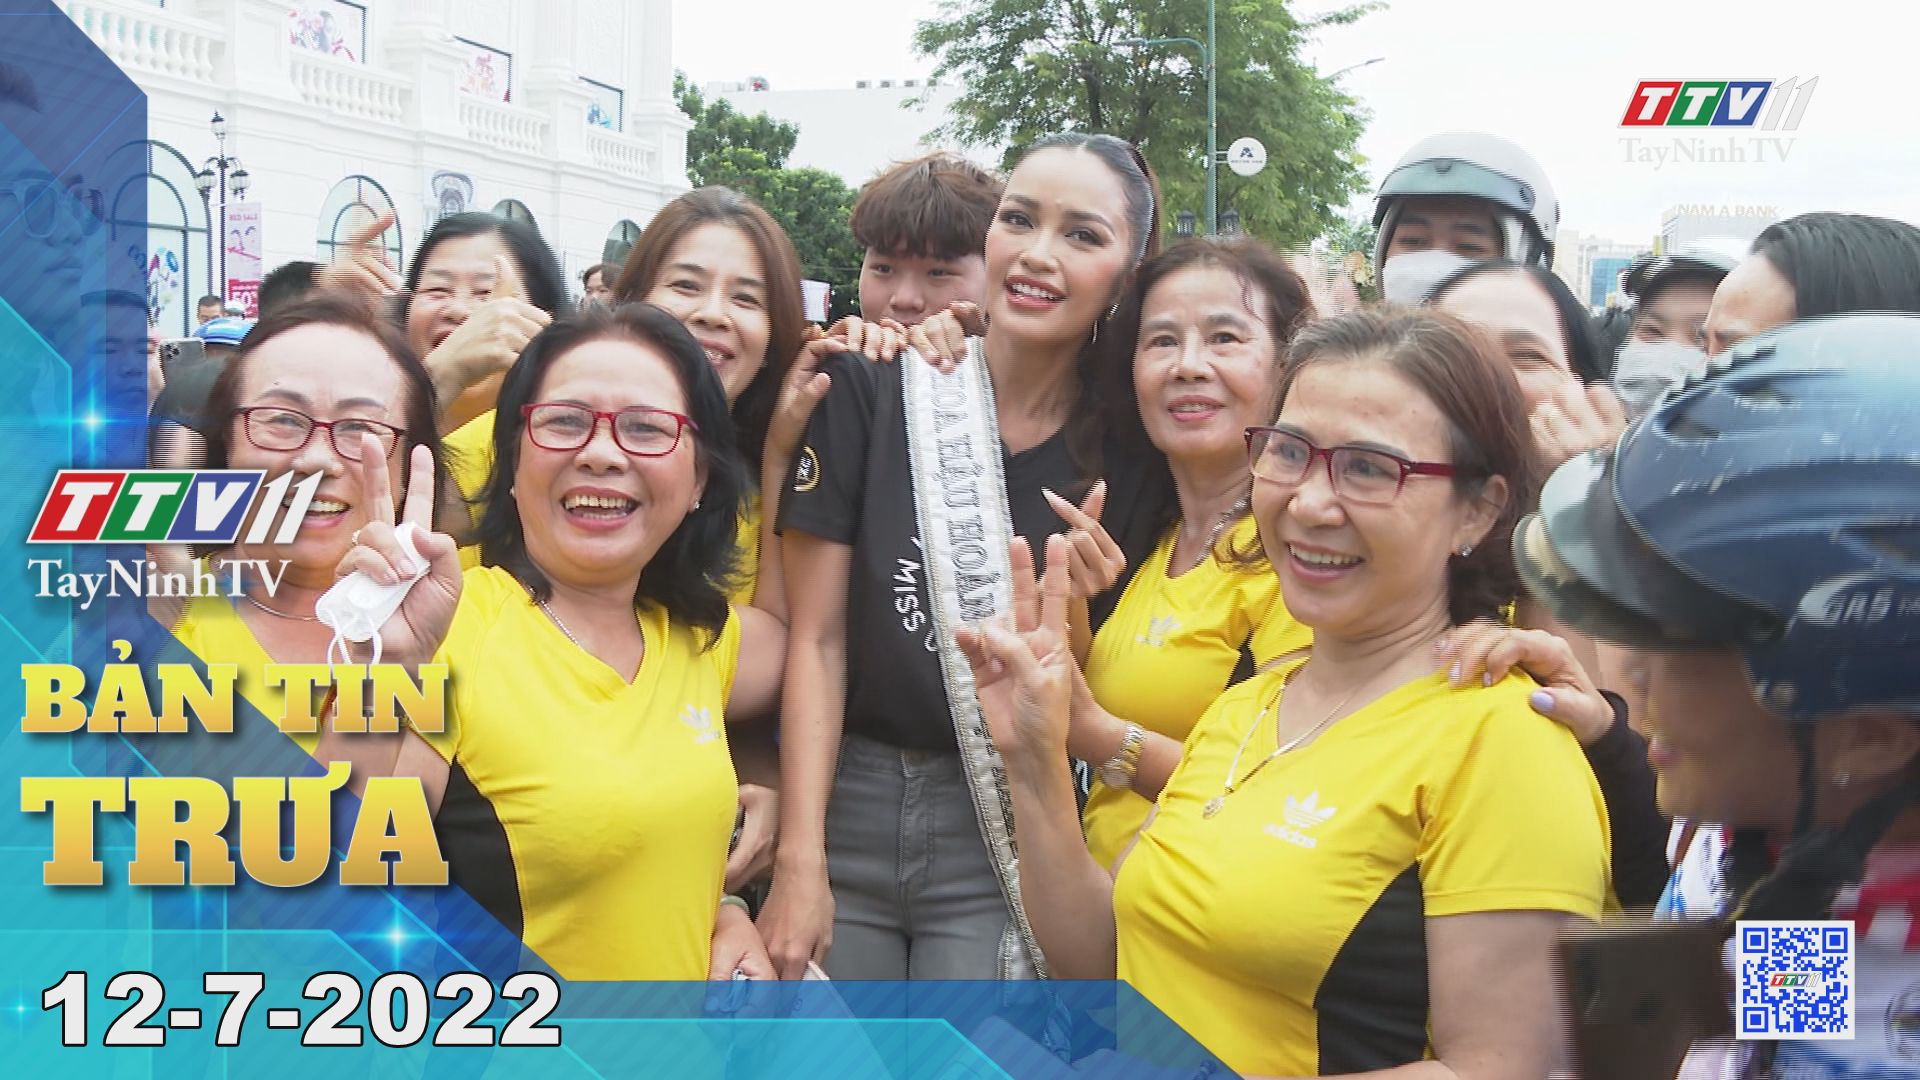 Bản tin trưa 12-7-2022 | Tin tức hôm nay | TayNinhTV